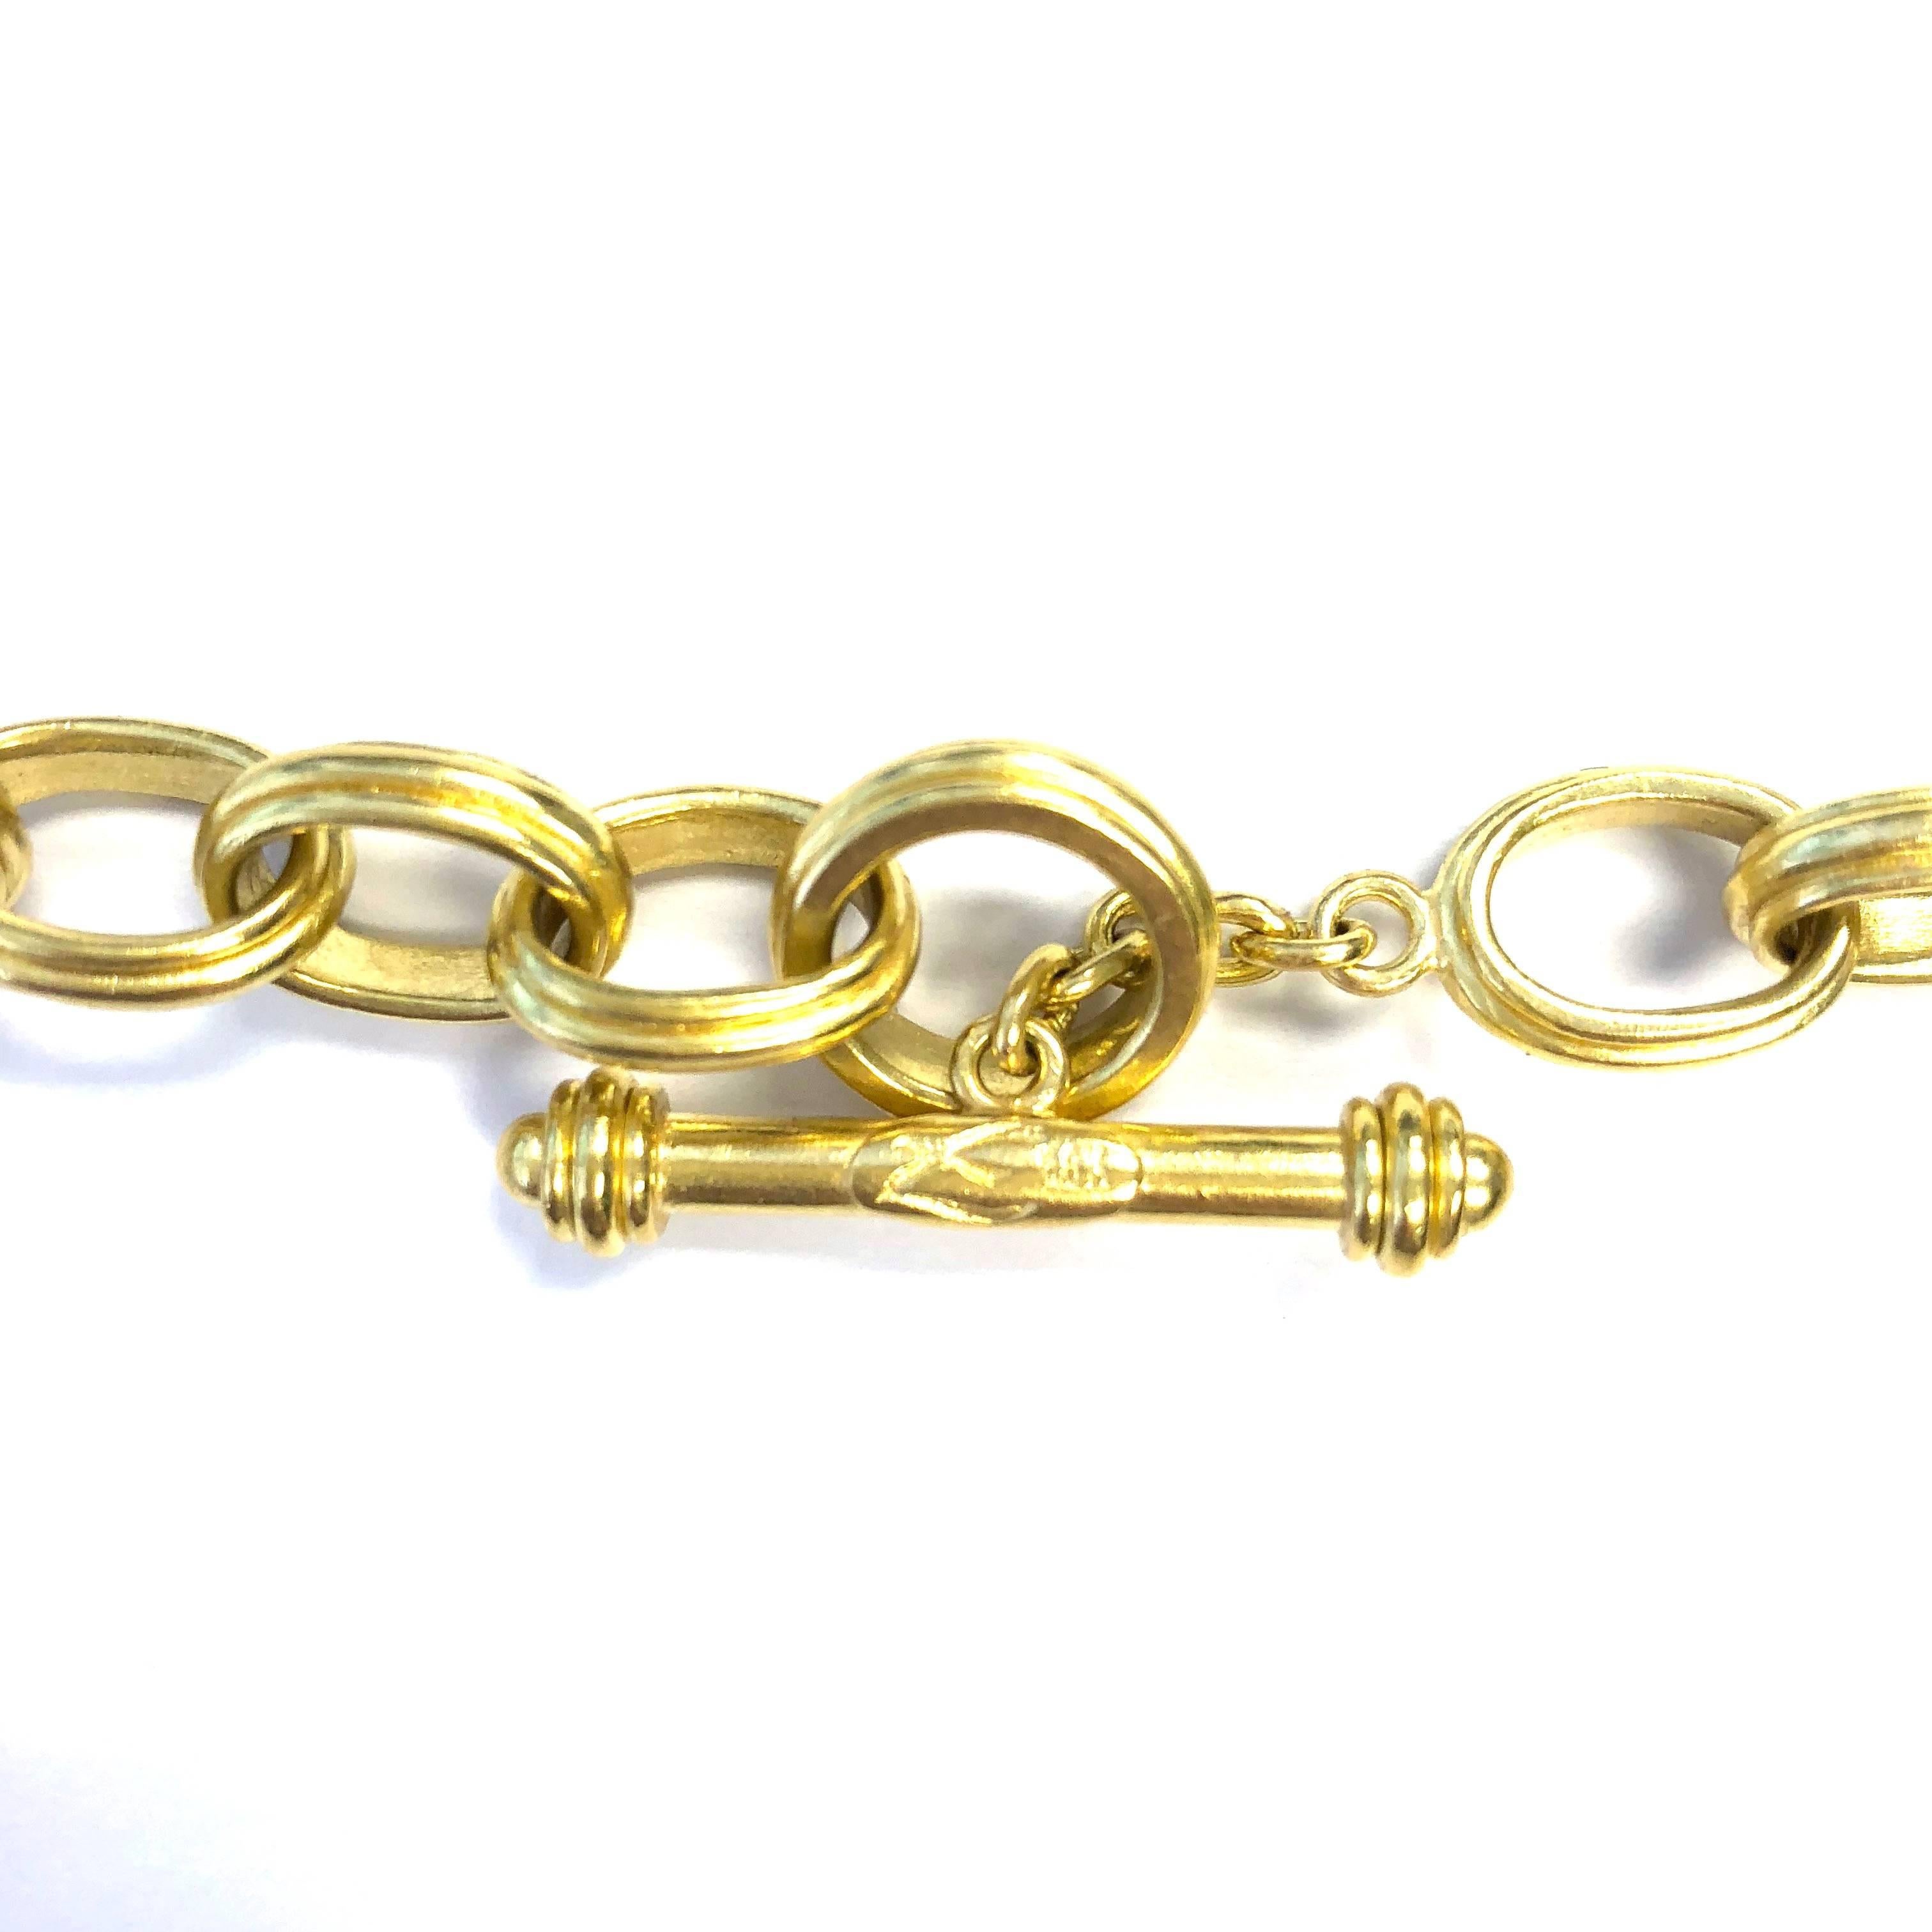 Elizabeth Locke 18k Gold Bergamo oval link necklace. 
Weight 66.9 grams. 
Measurements:
17.5